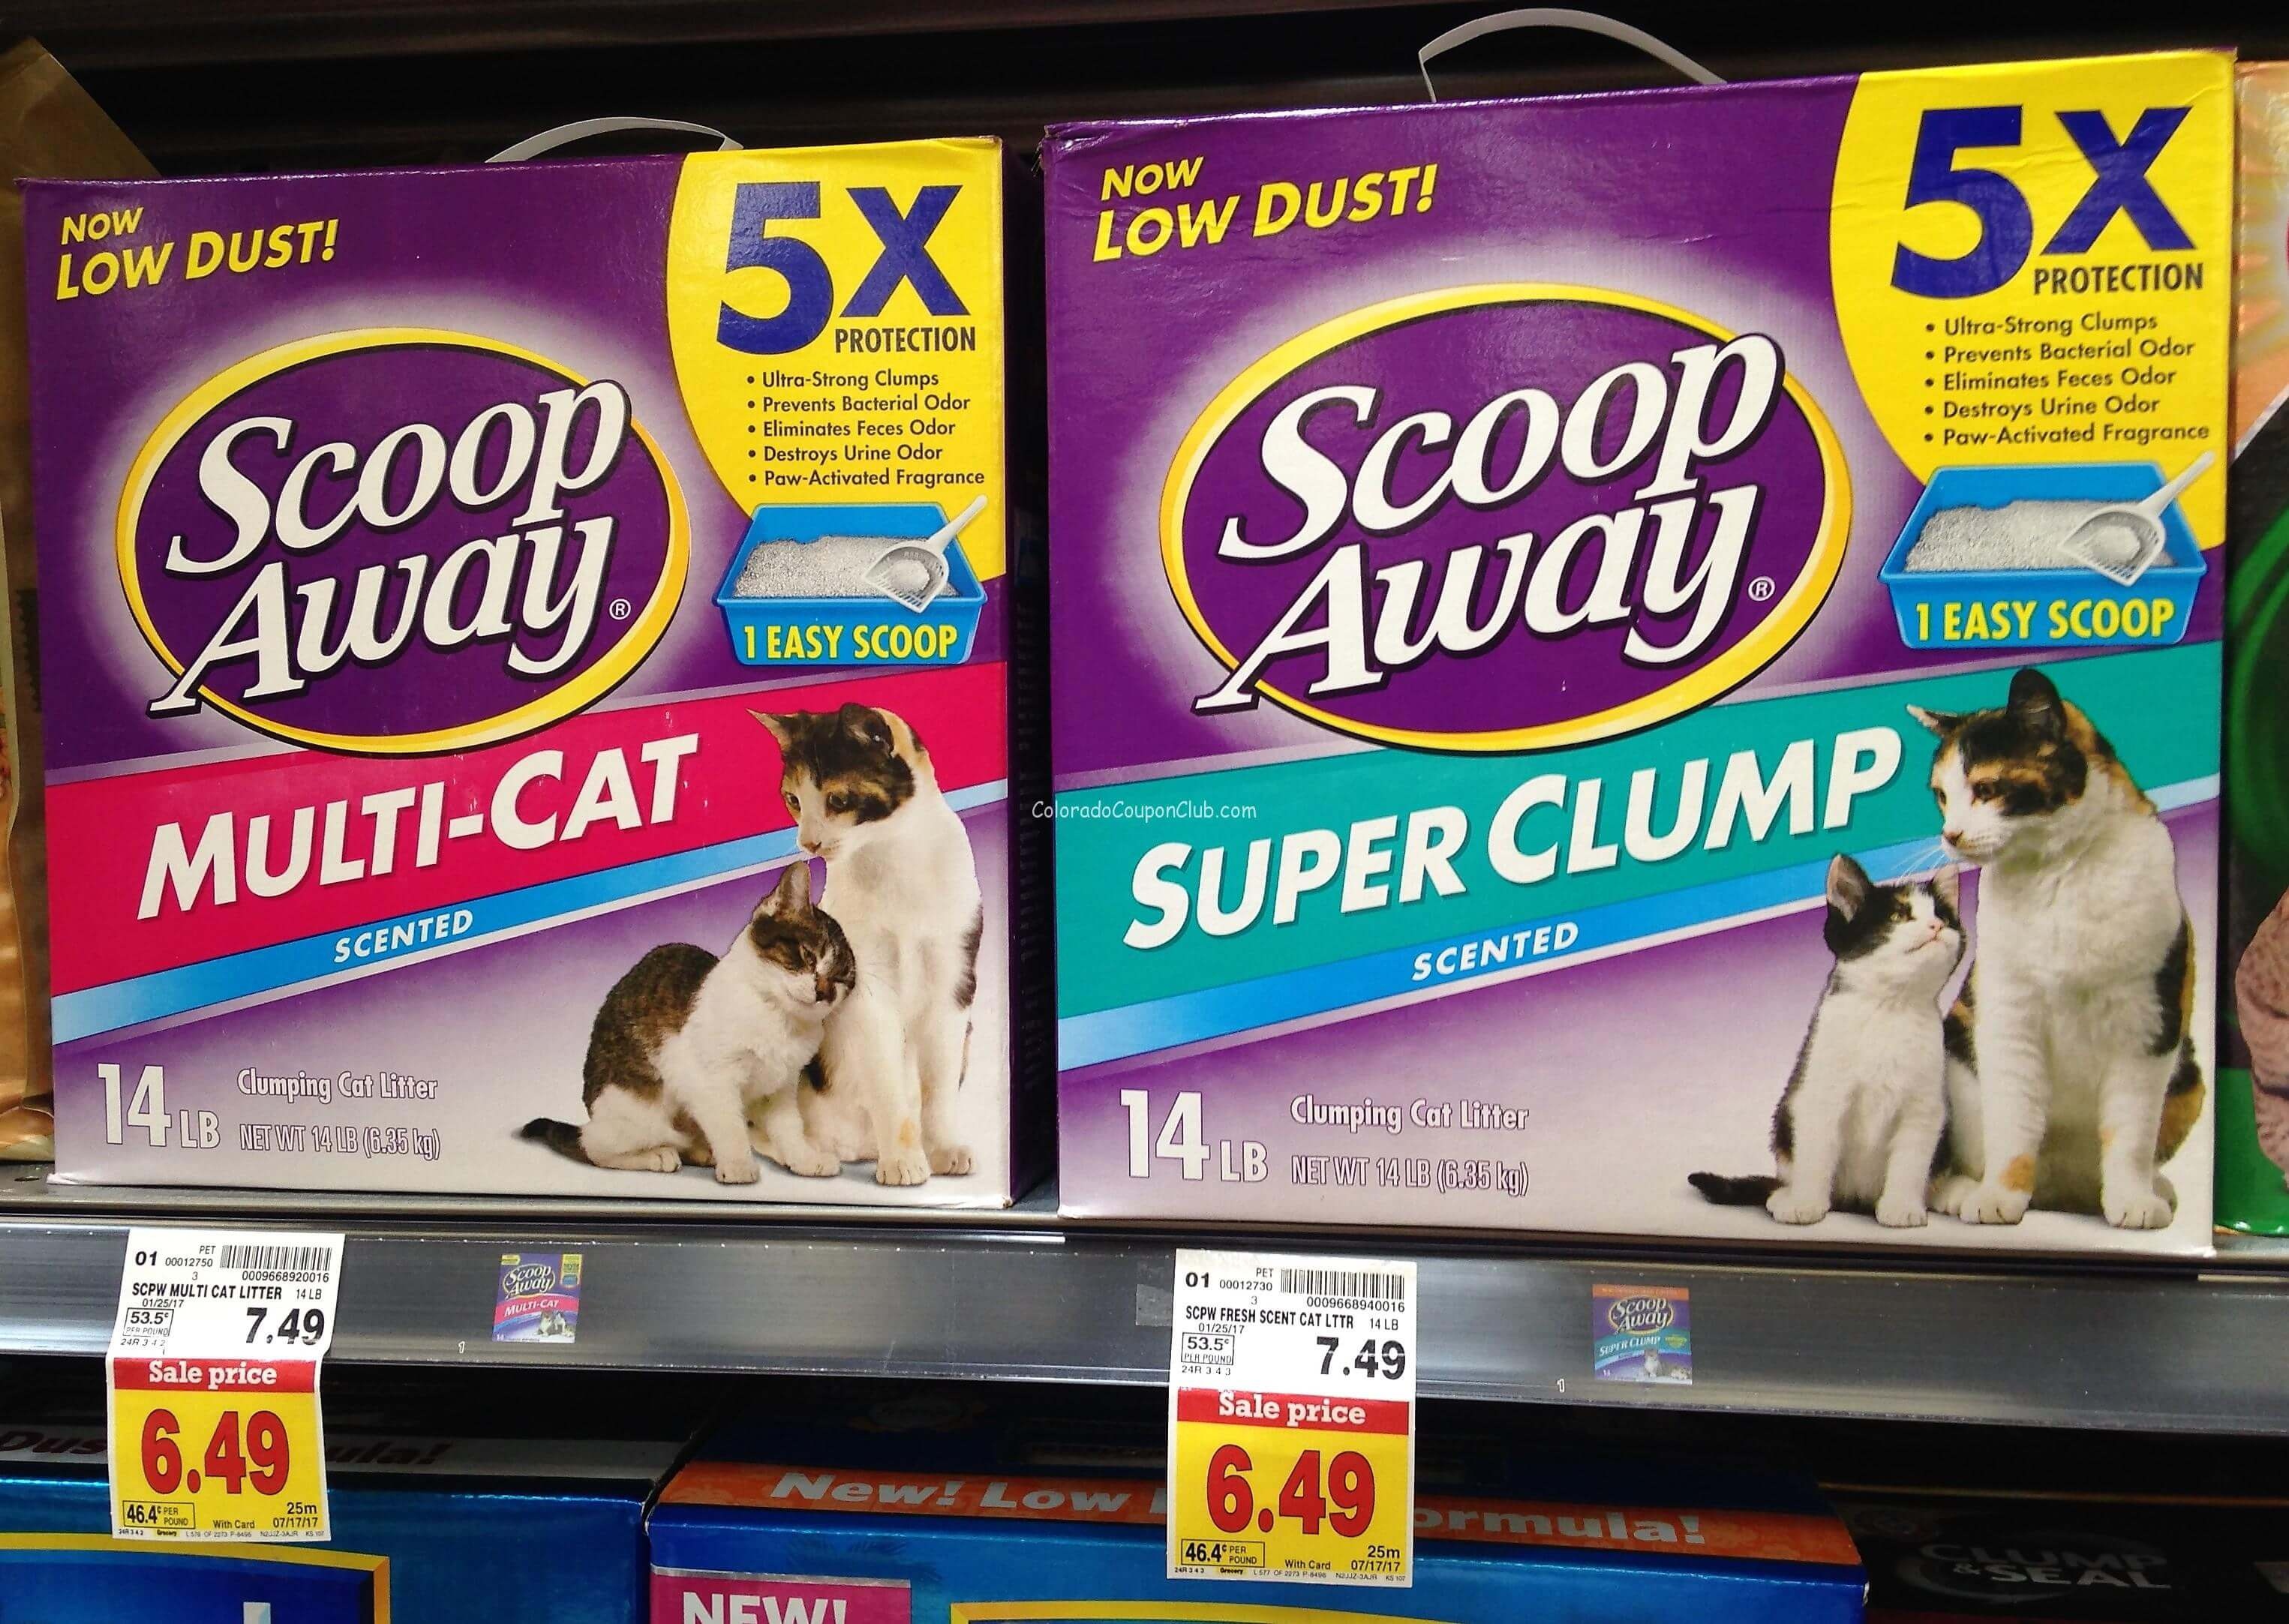 New Scoop Away Cat Litter Coupon = $4.99 At King Soopers! - Colorado - Free Printable Scoop Away Coupons